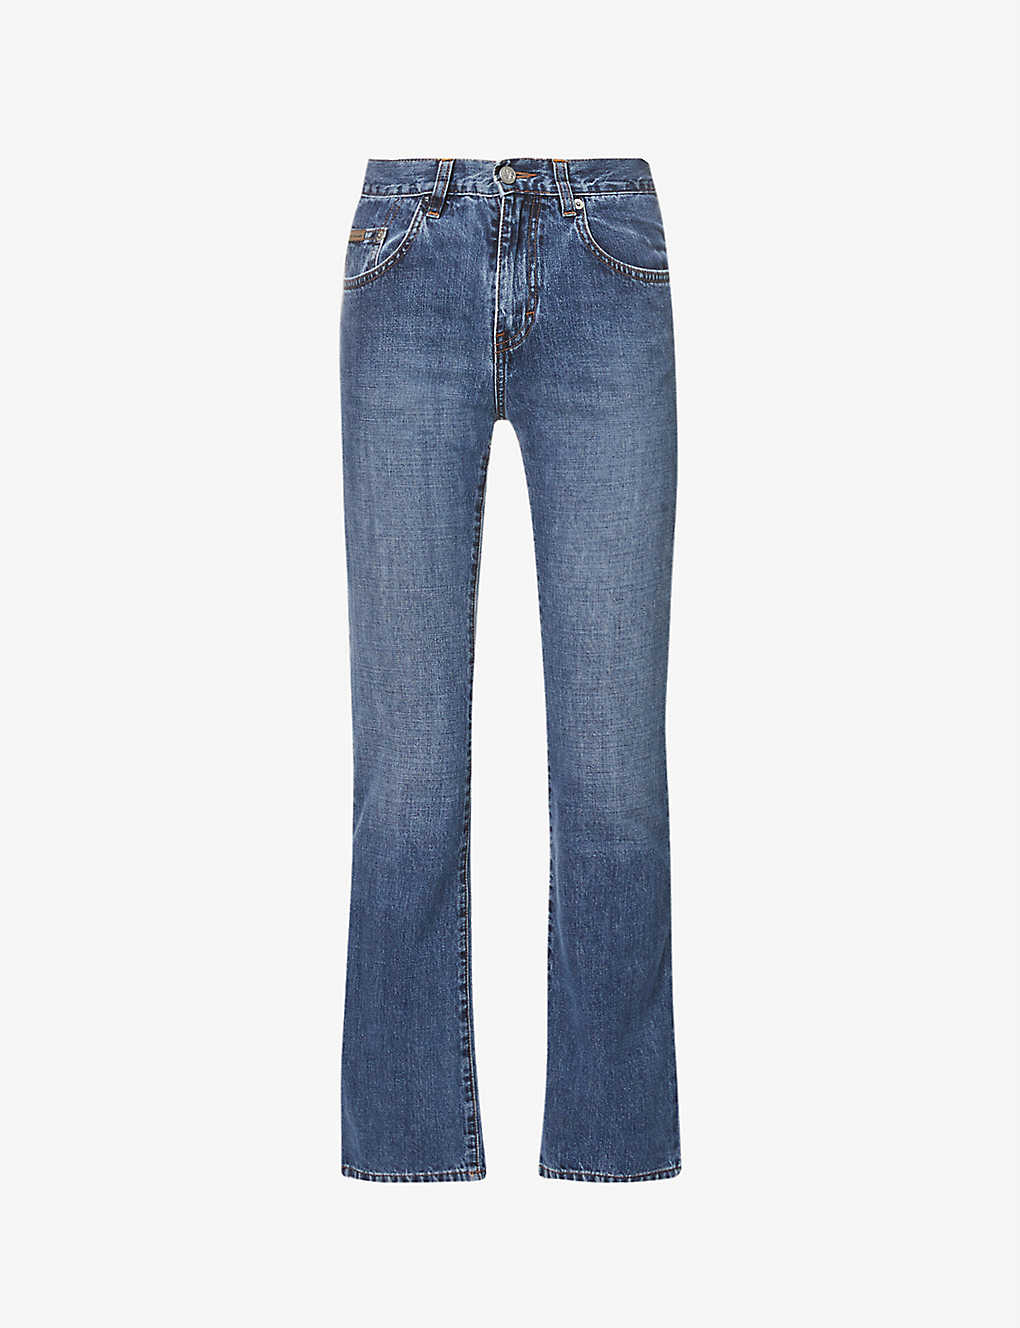 Vintage flared slim mid-rise jeans(9386266)